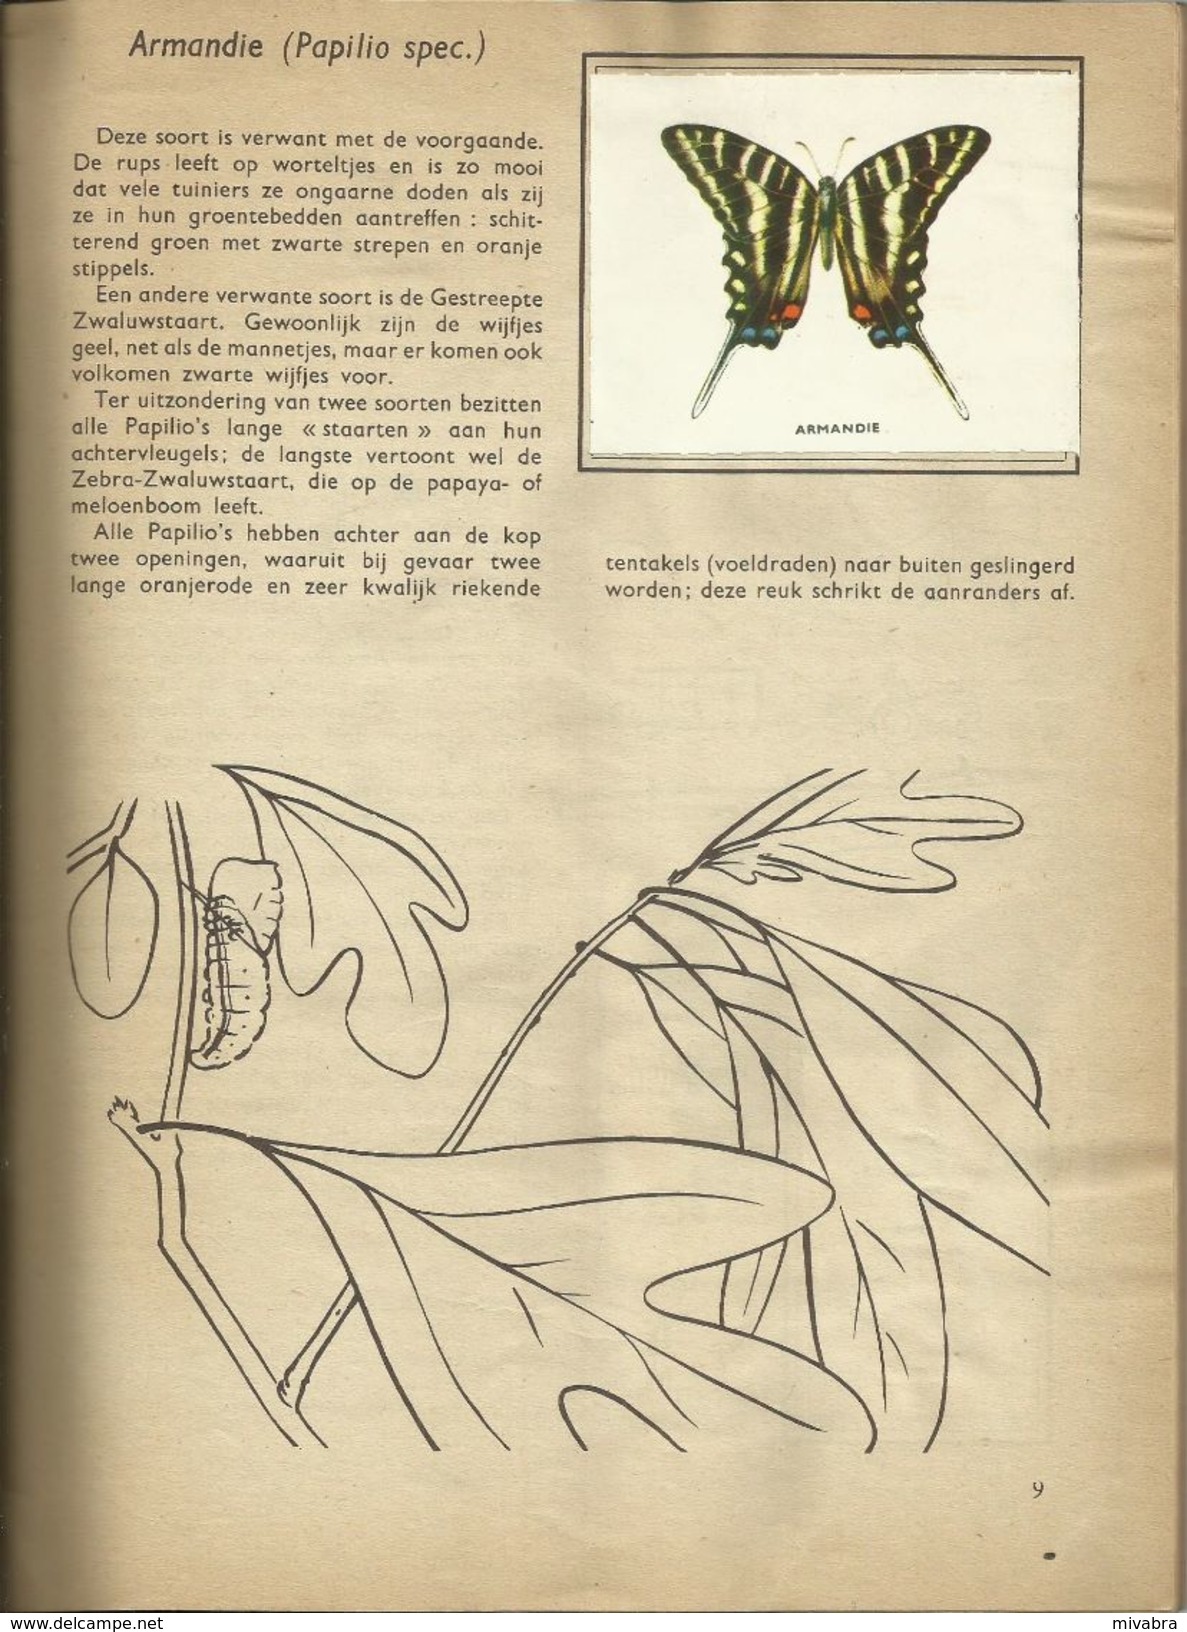 ENCYCLOPEDIE IN ZEGELS N° 10 - DE INSEKTEN ( VLINDERS BUTTERFLIES PAPILLON - KEVERS COLEOPTERA BEETLES ) 1957 - Enzyklopädien